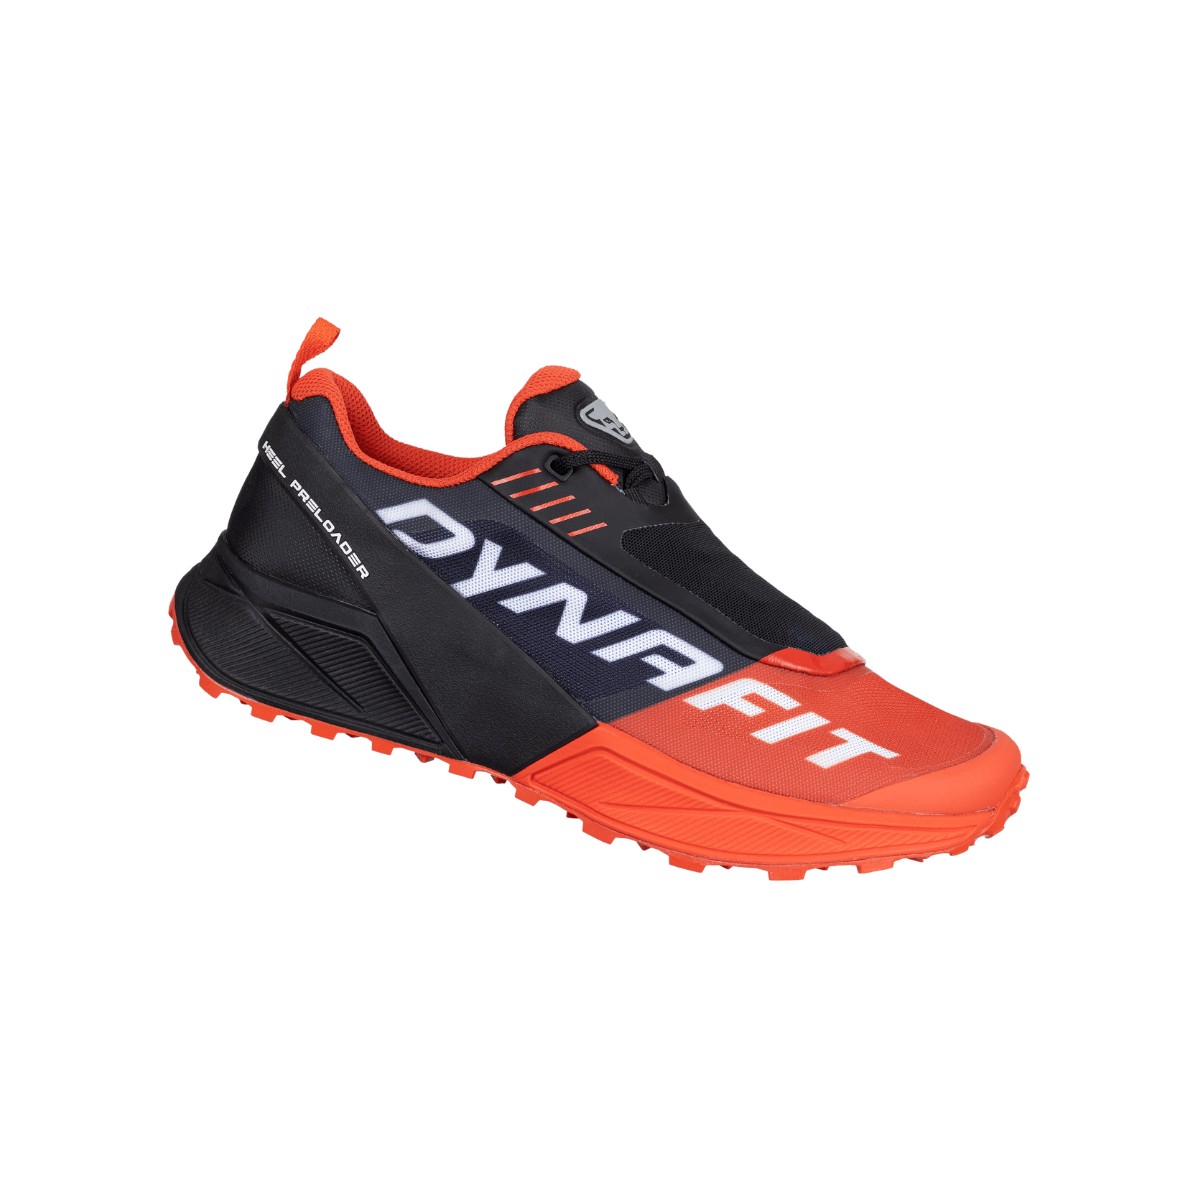 Chaussures Dynafit Ultra 100 Noir Orange AW22